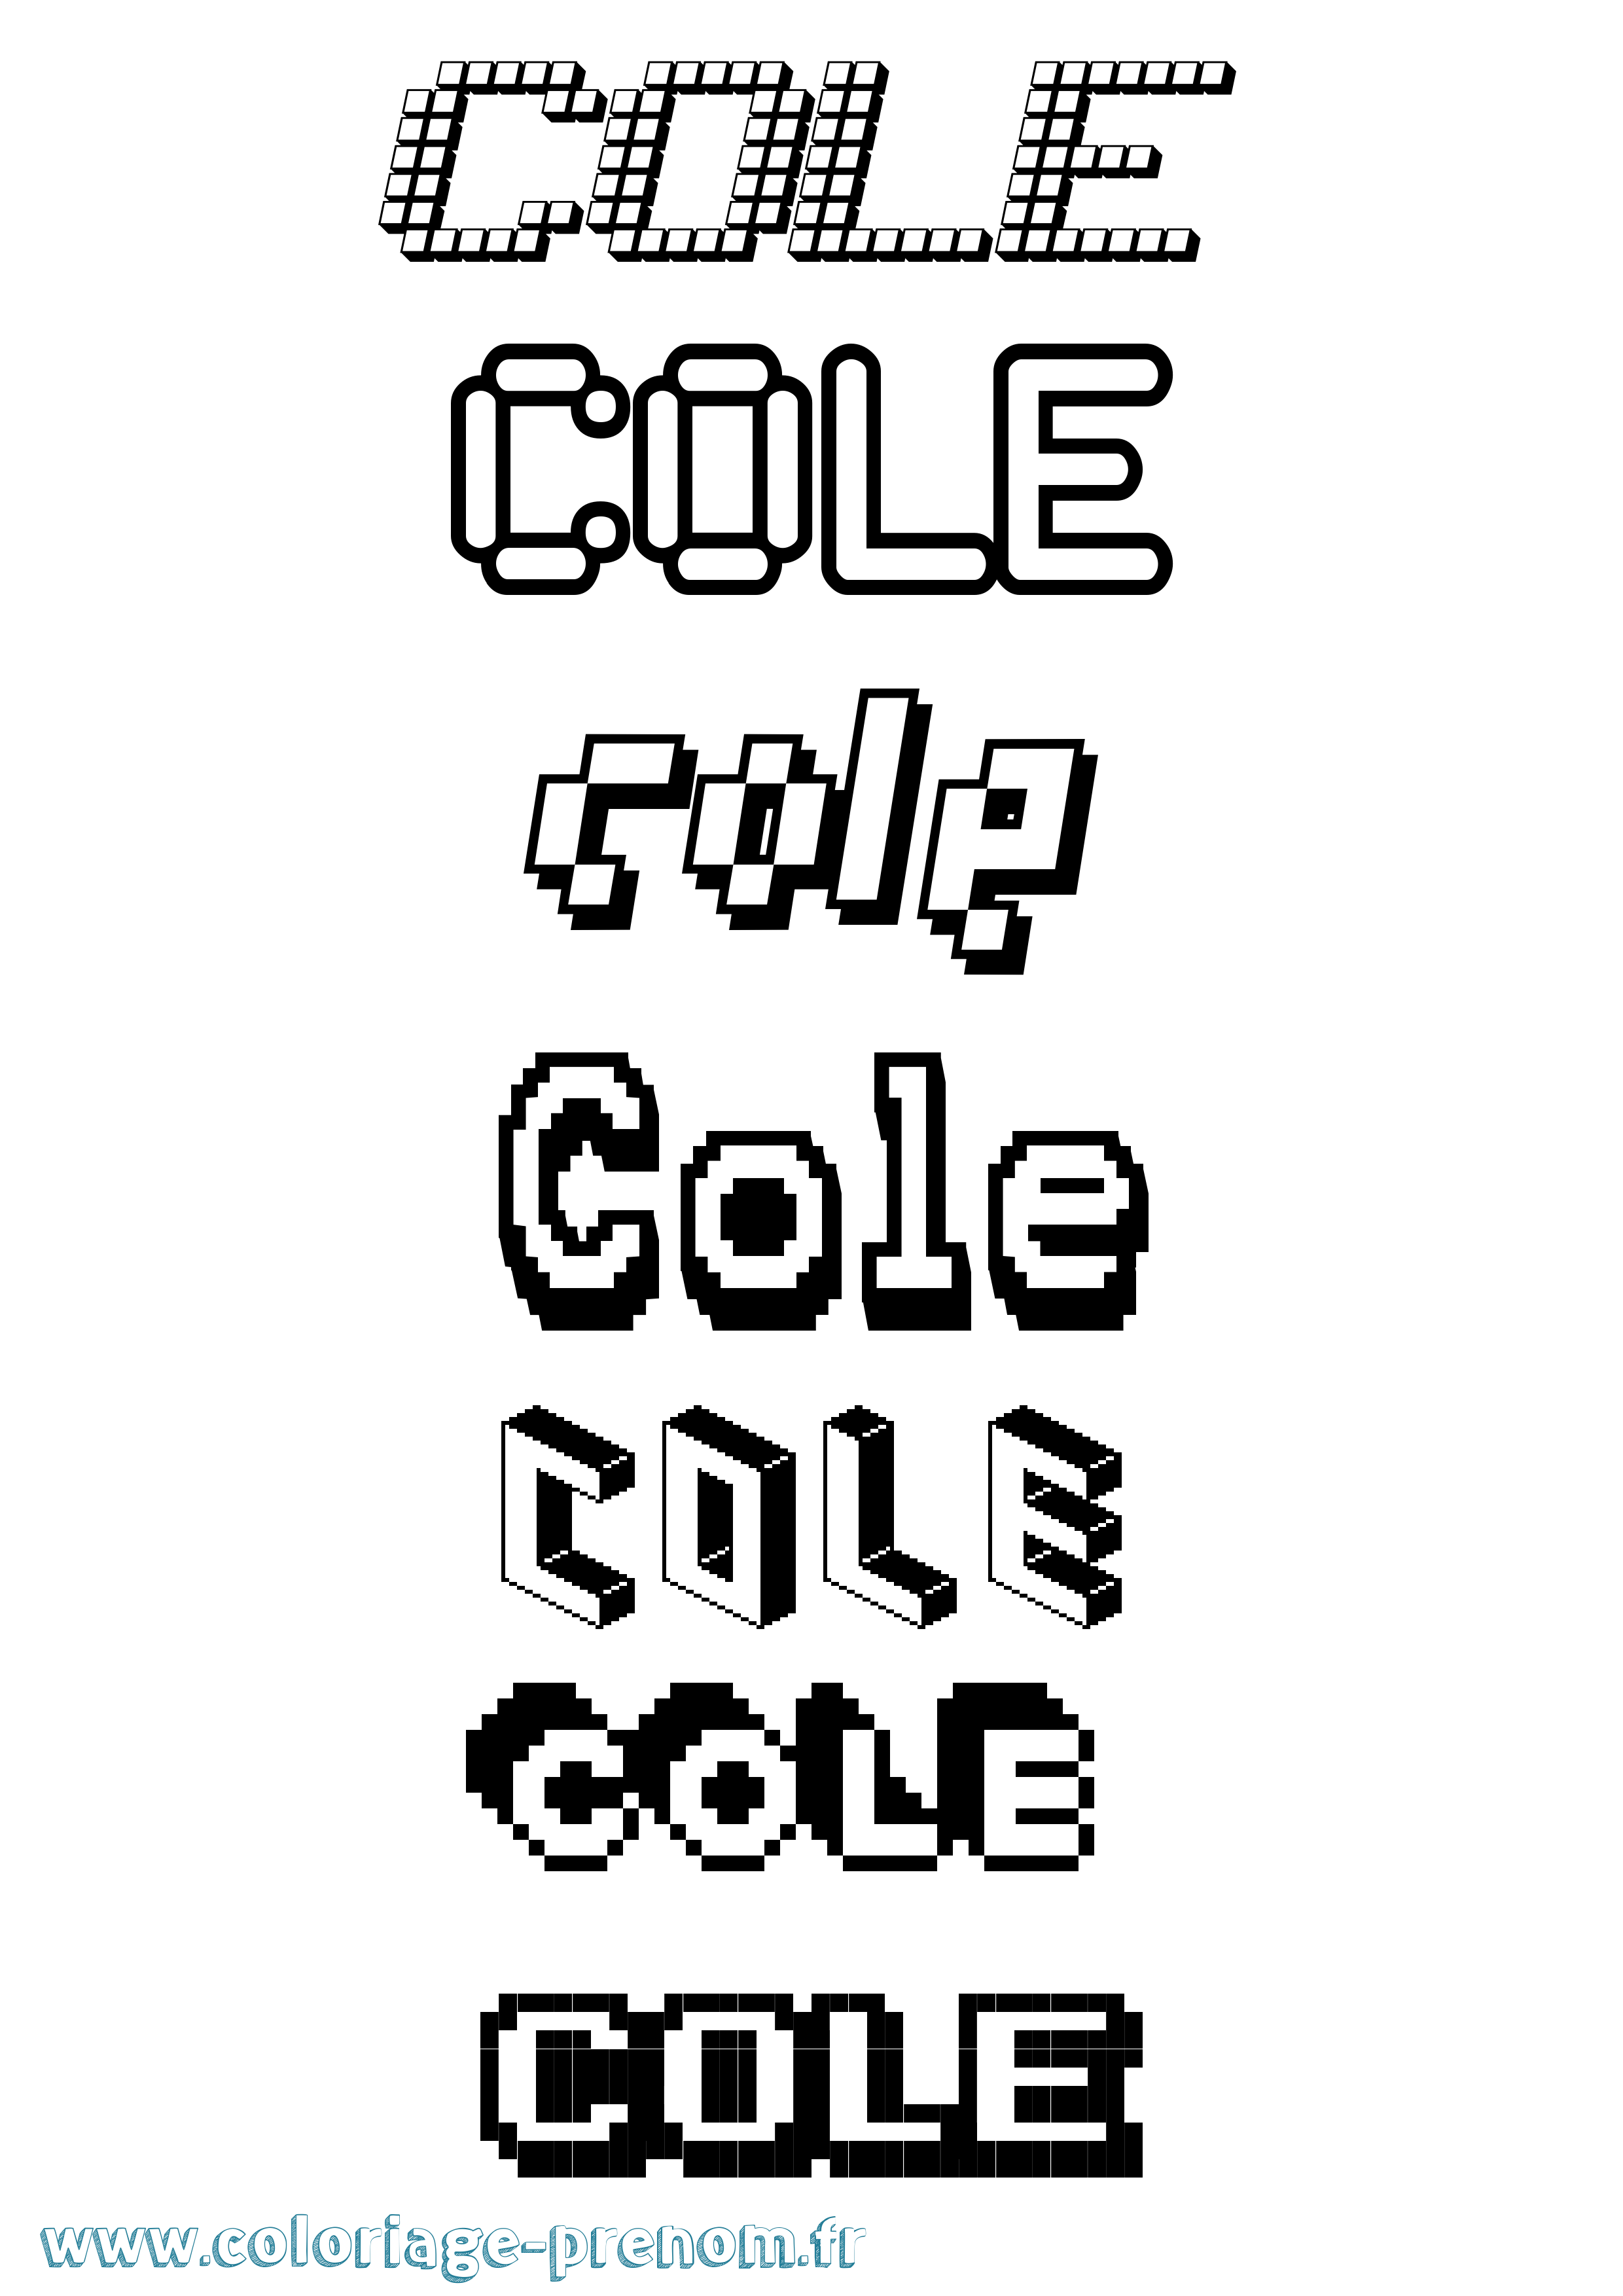 Coloriage prénom Cole Pixel